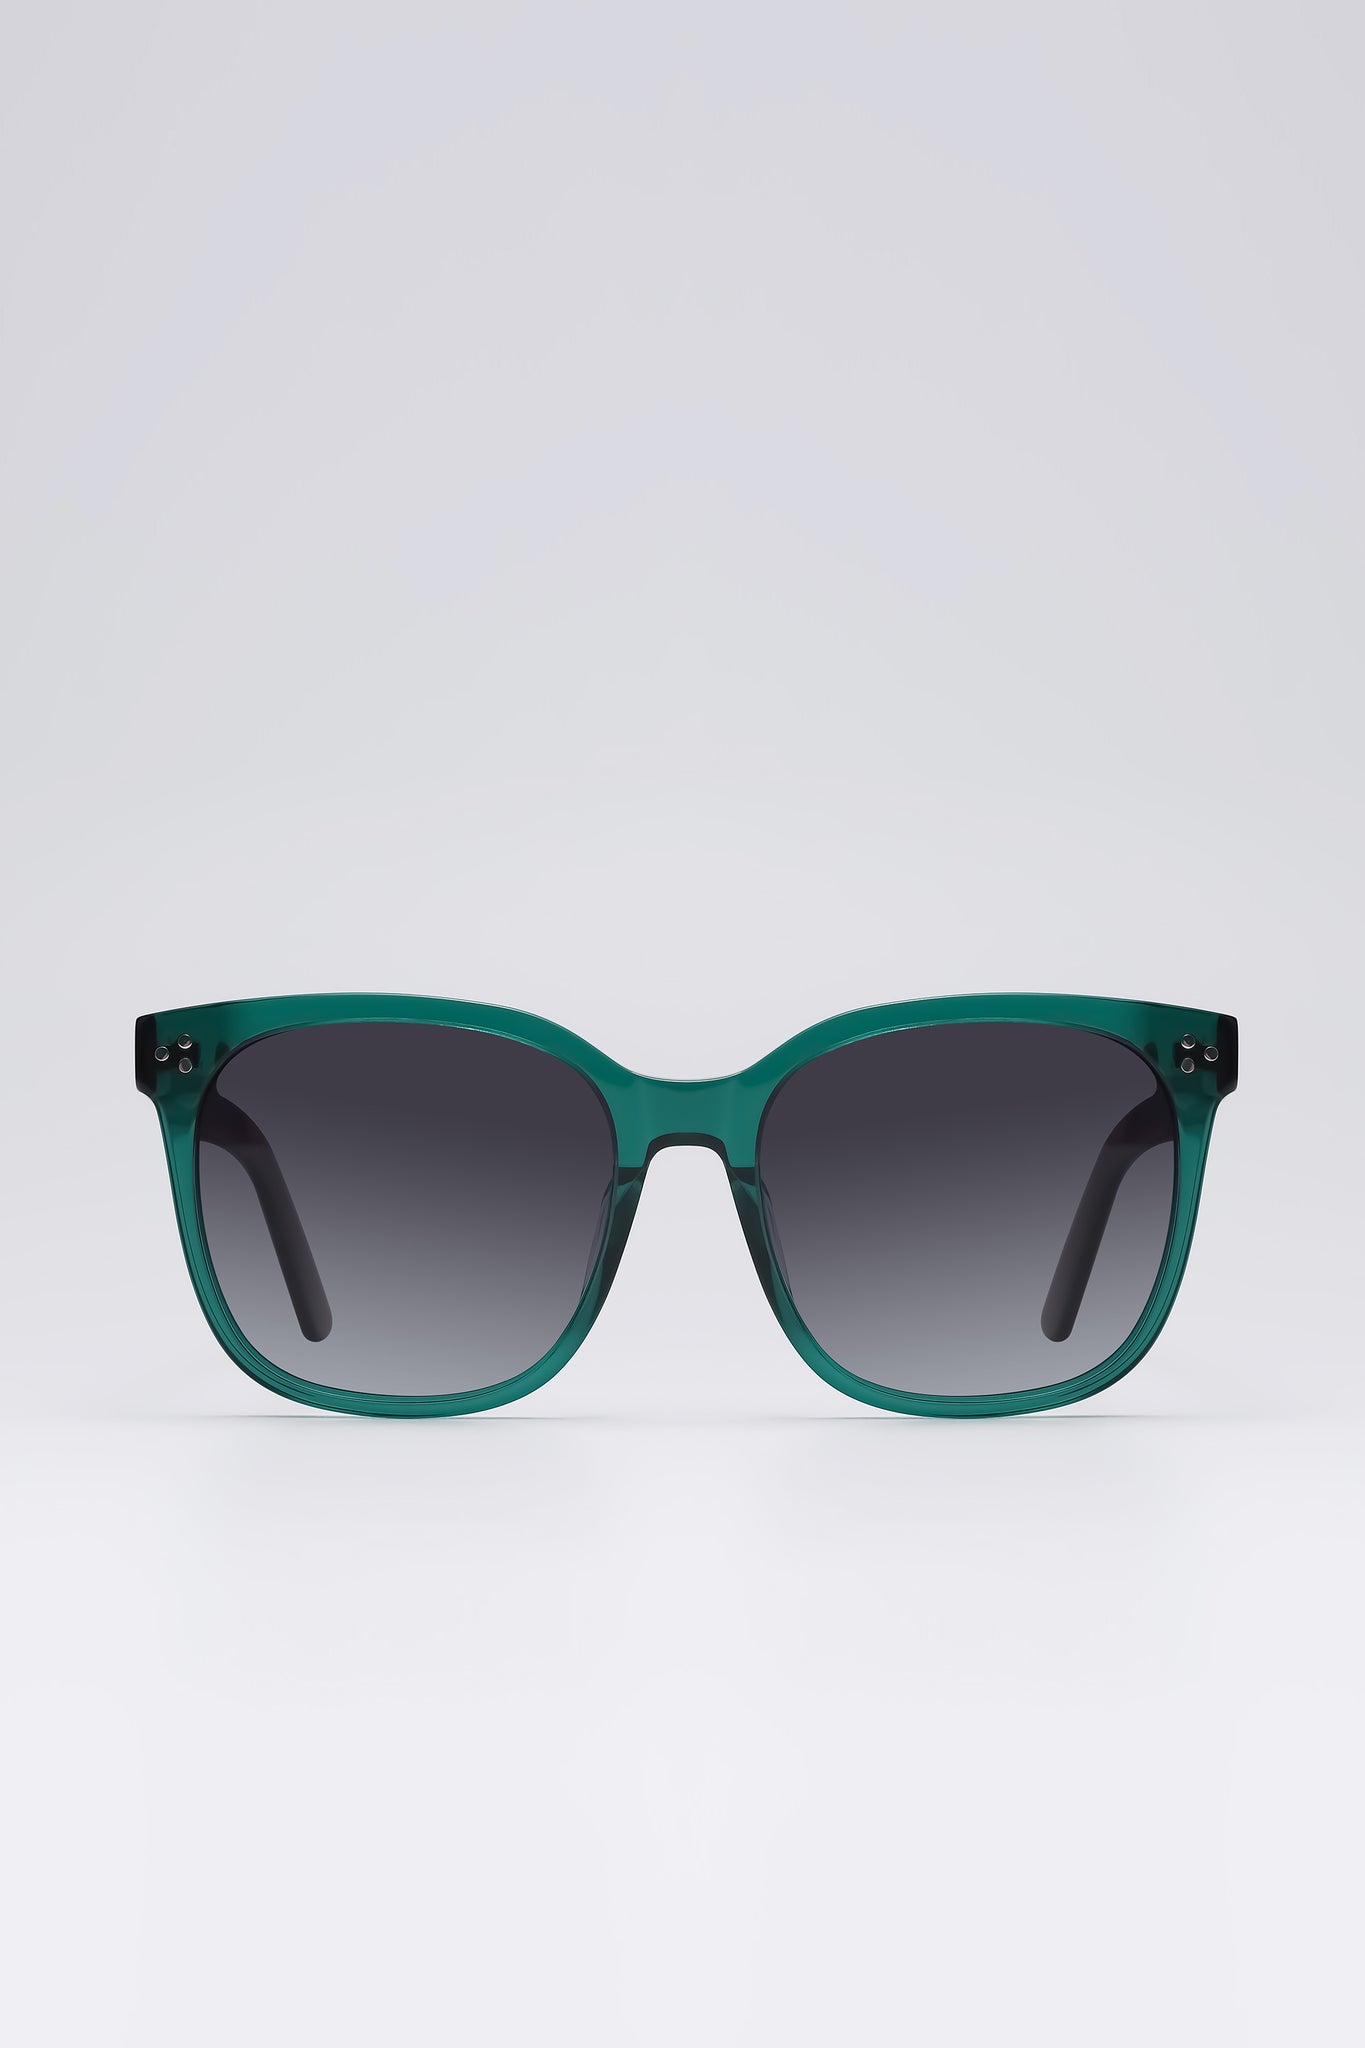 Fangyan | Square-Round Green Sunglasses